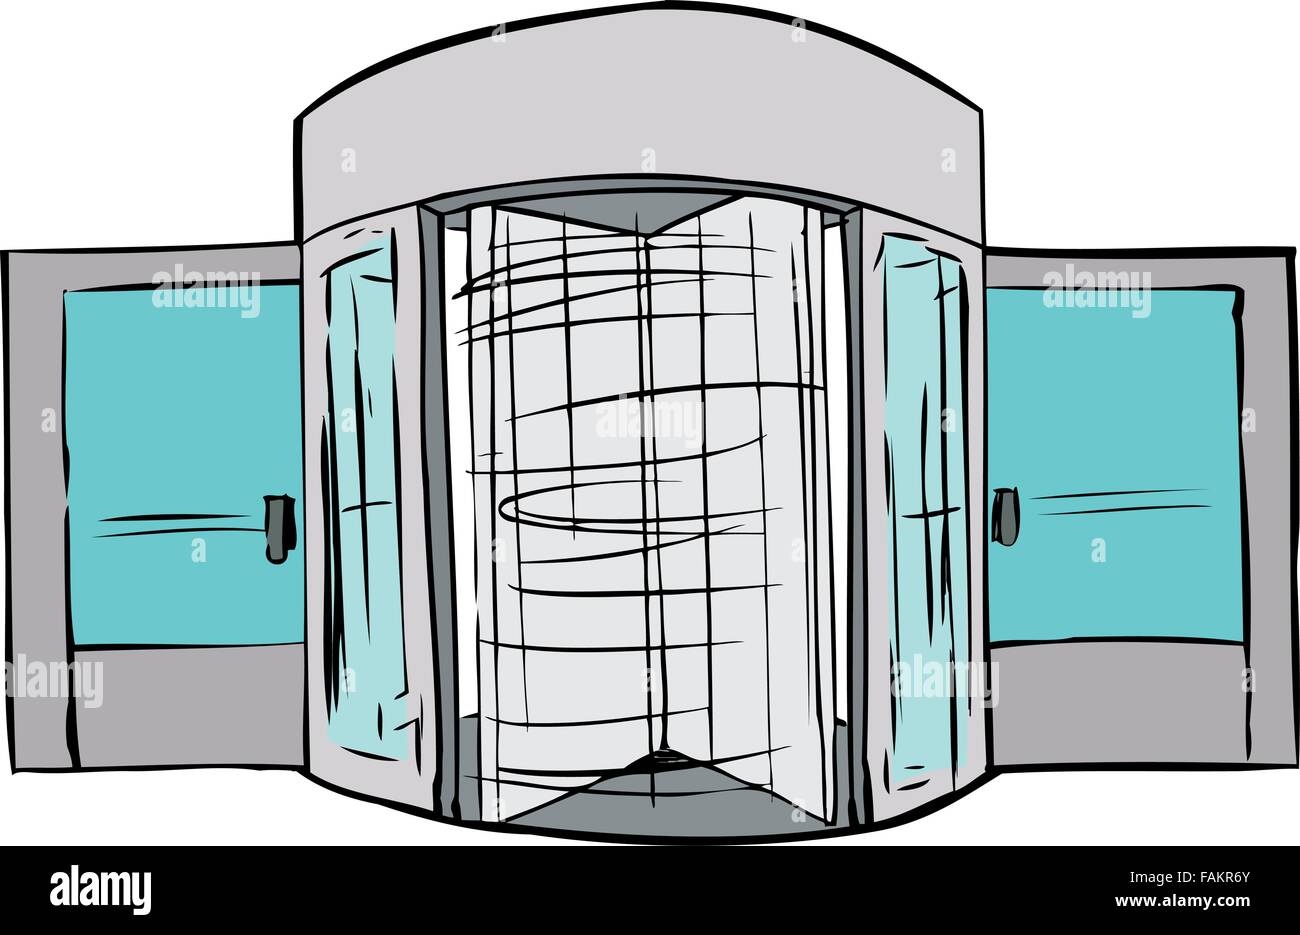 La puerta giratoria Imágenes vectoriales de stock - Alamy